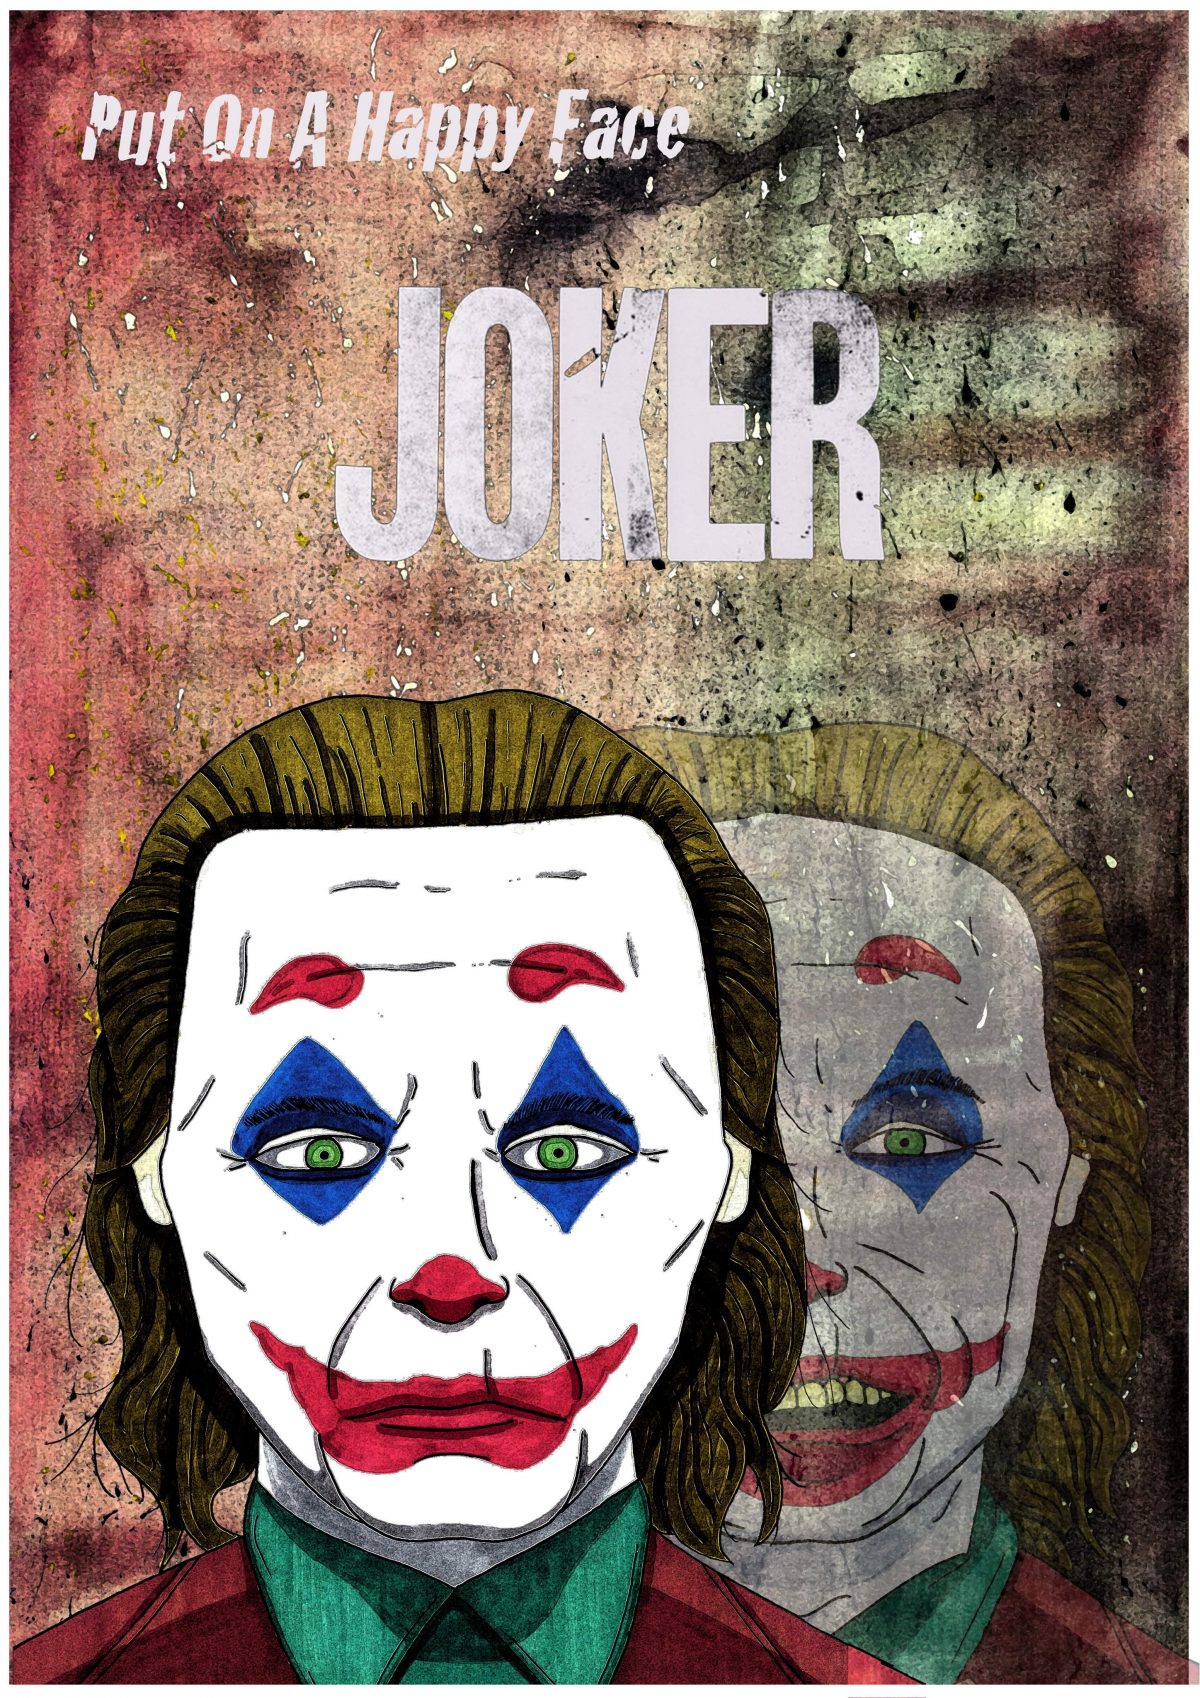 Joker - Put on a happy face - PosterSpy